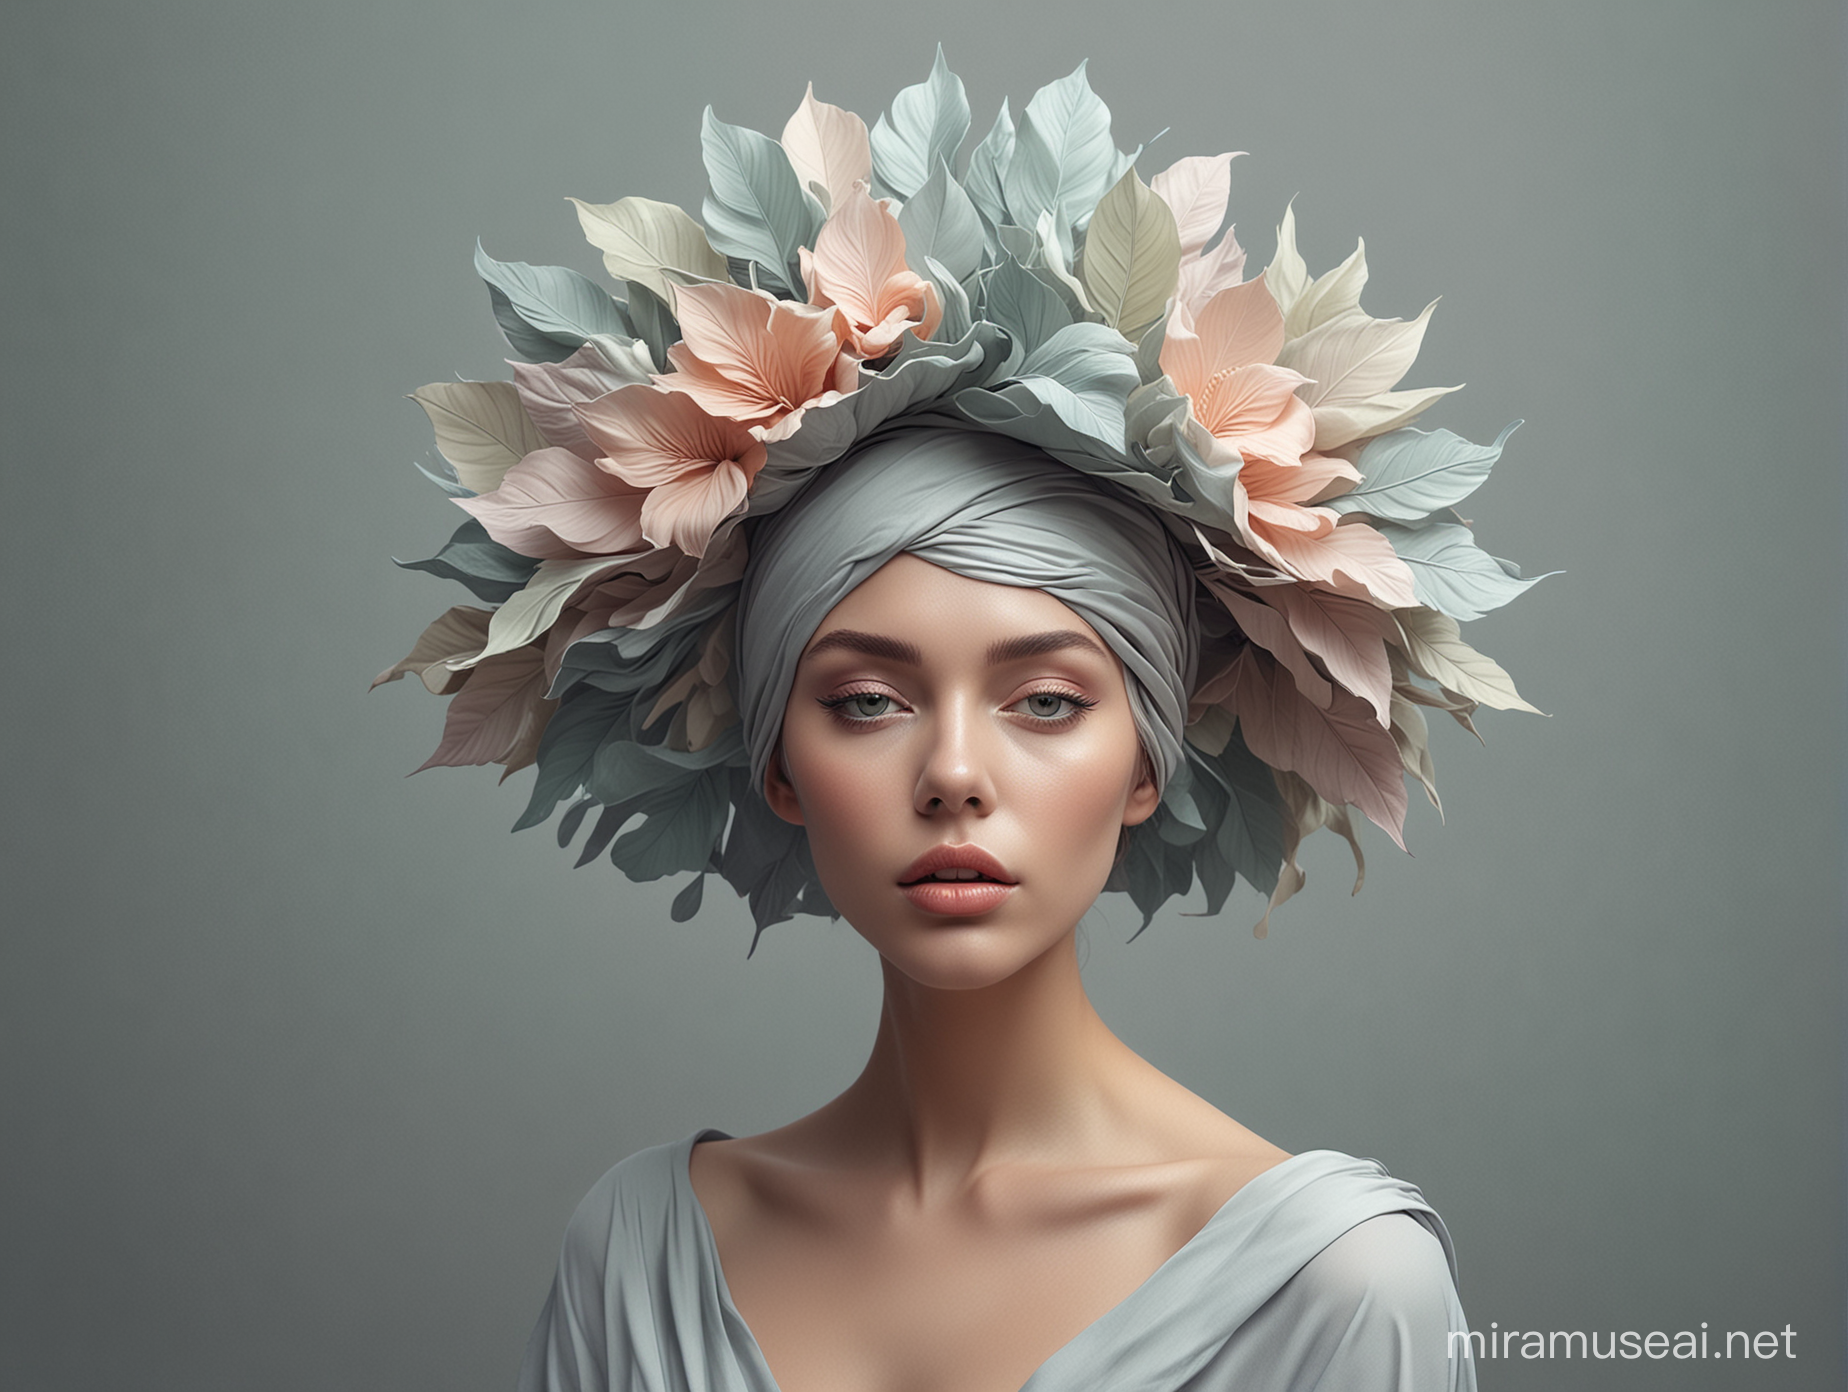 Minimalist Surreal Digital Art Elegant Woman in Pastel with Sculptural Headwear